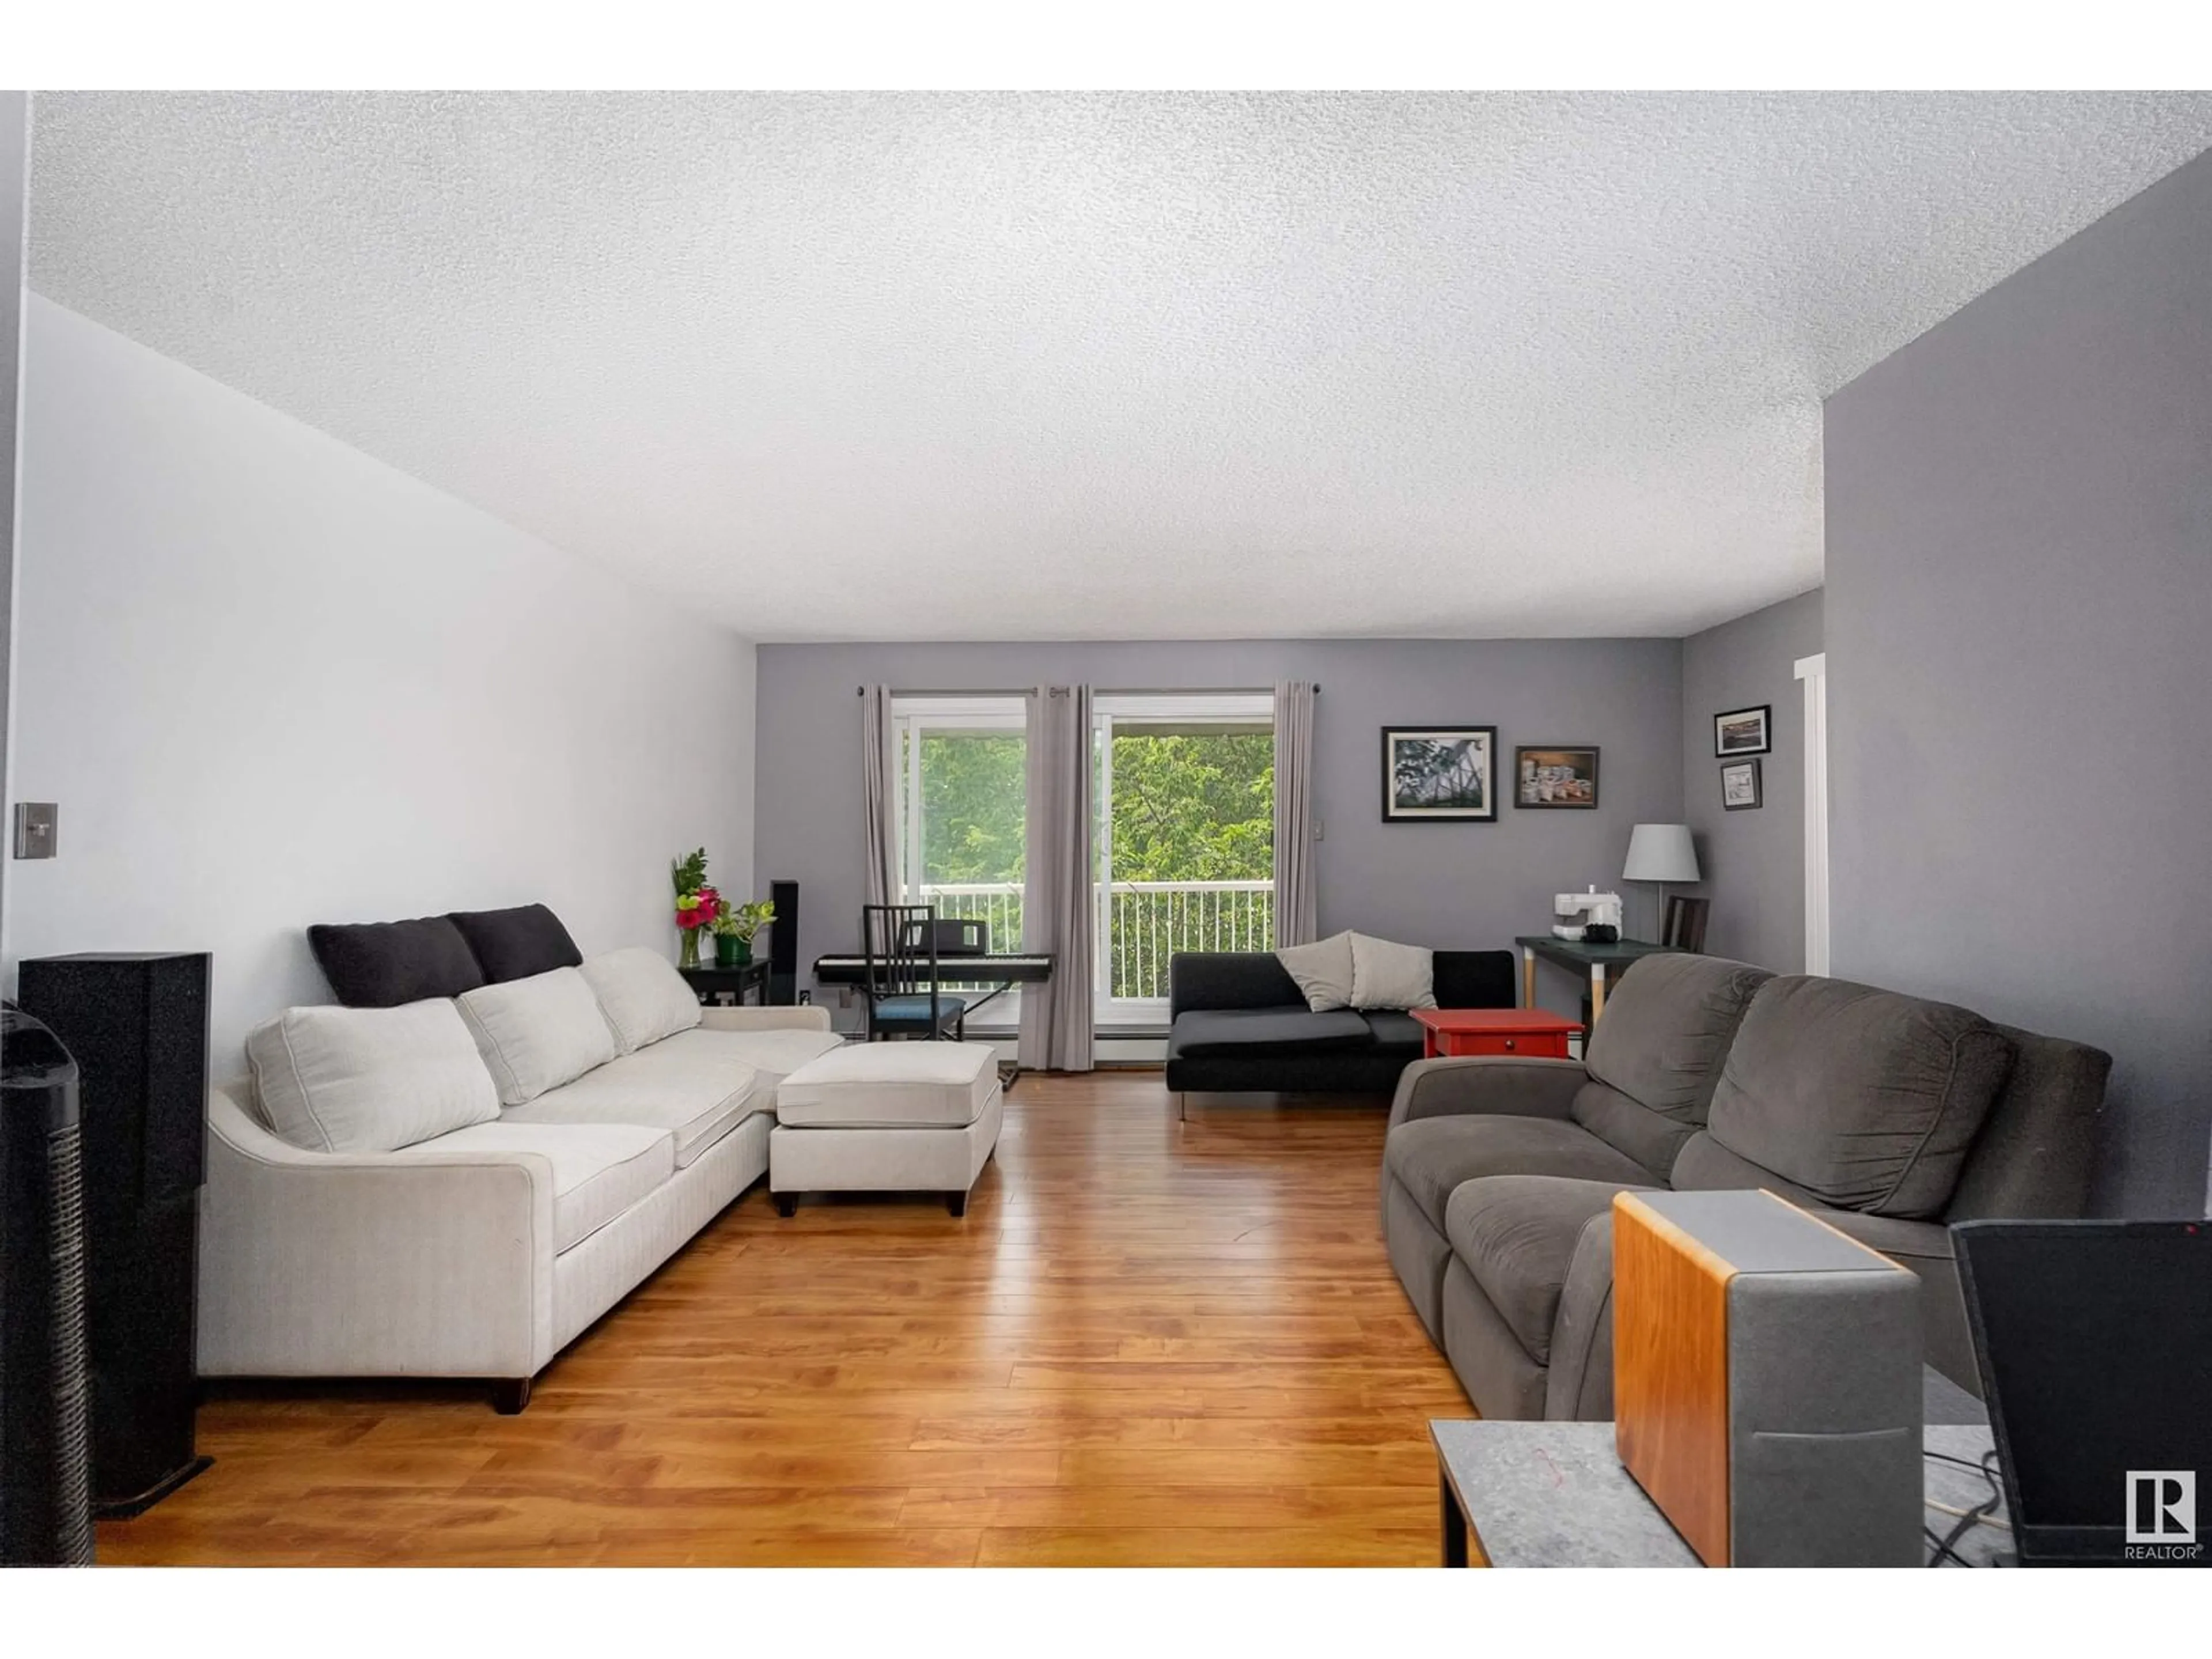 Living room for #405 10615 110 ST NW, Edmonton Alberta T5H3C7